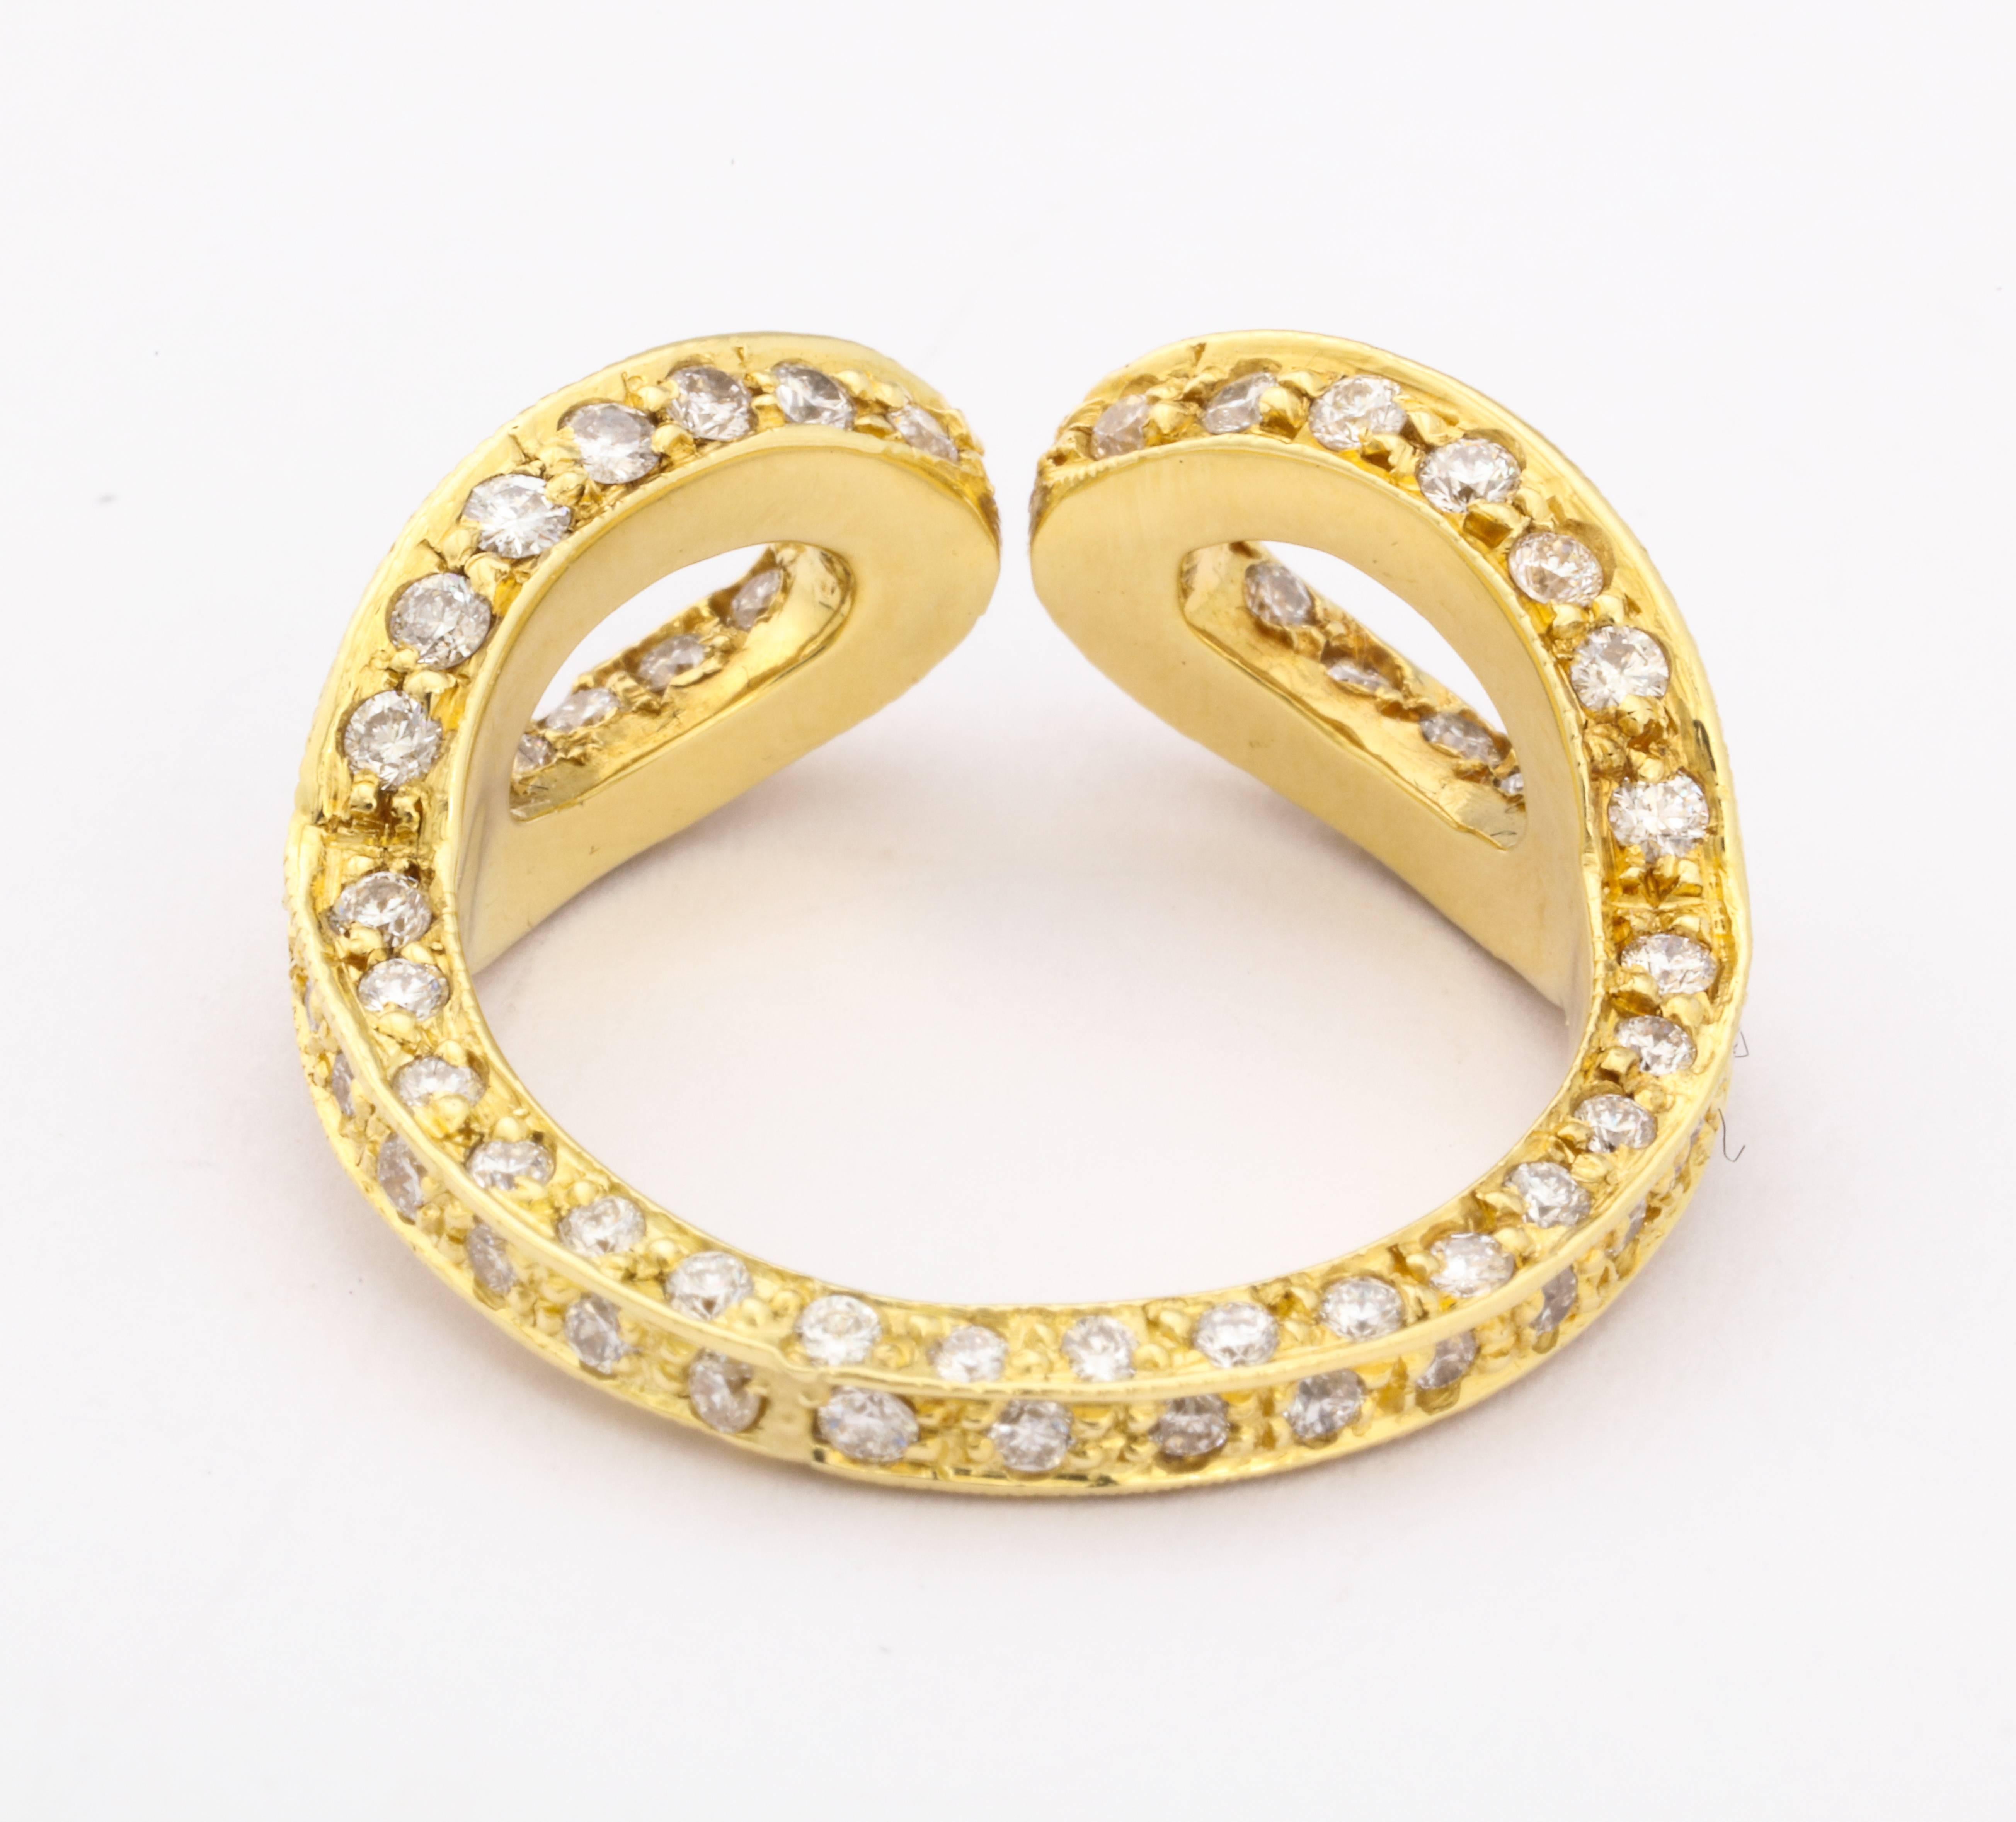 18k yellow gold and white diamonds, open ring.